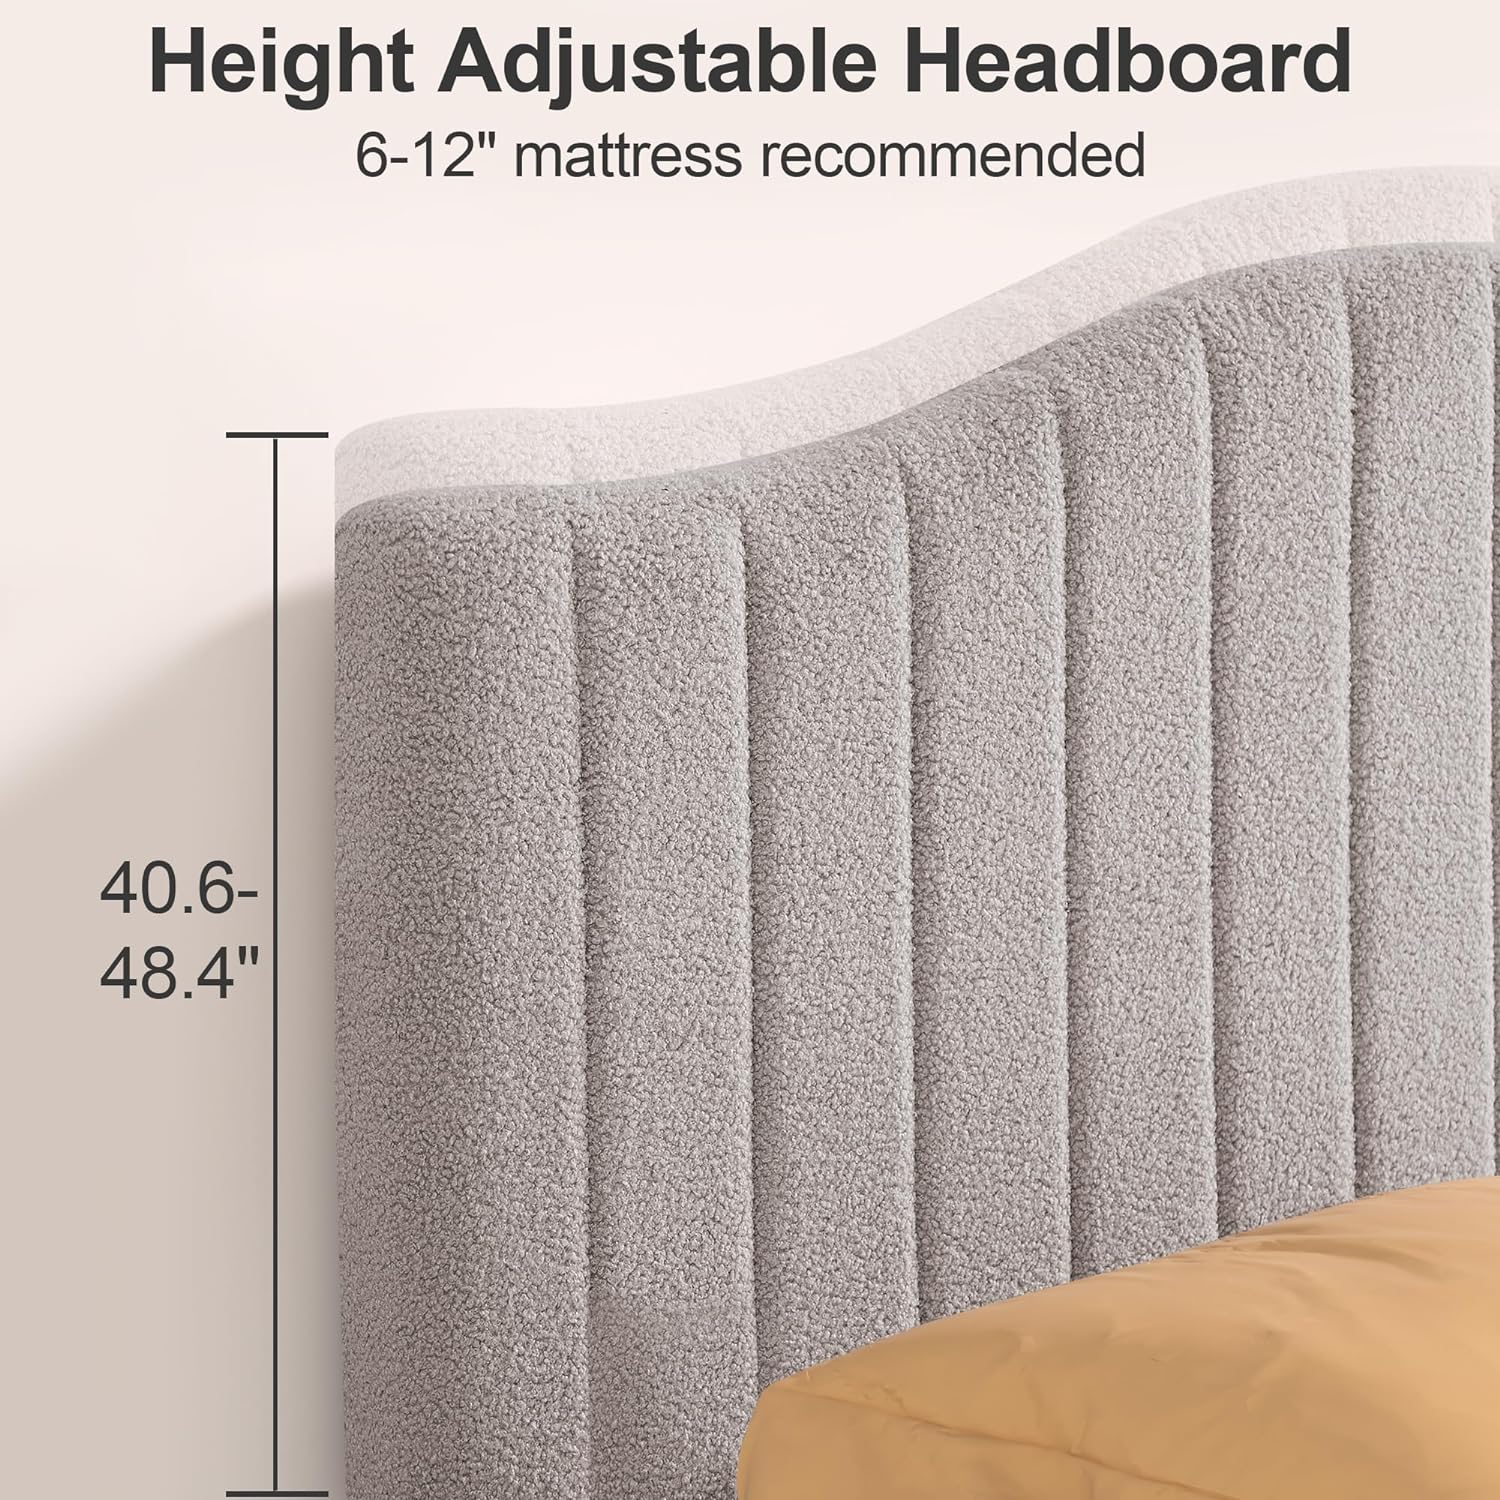 VECELO Upholstered Platform Bed Frame with Sheepskin Fabric Adjustable Headboard/Strong Wood Slats Supports